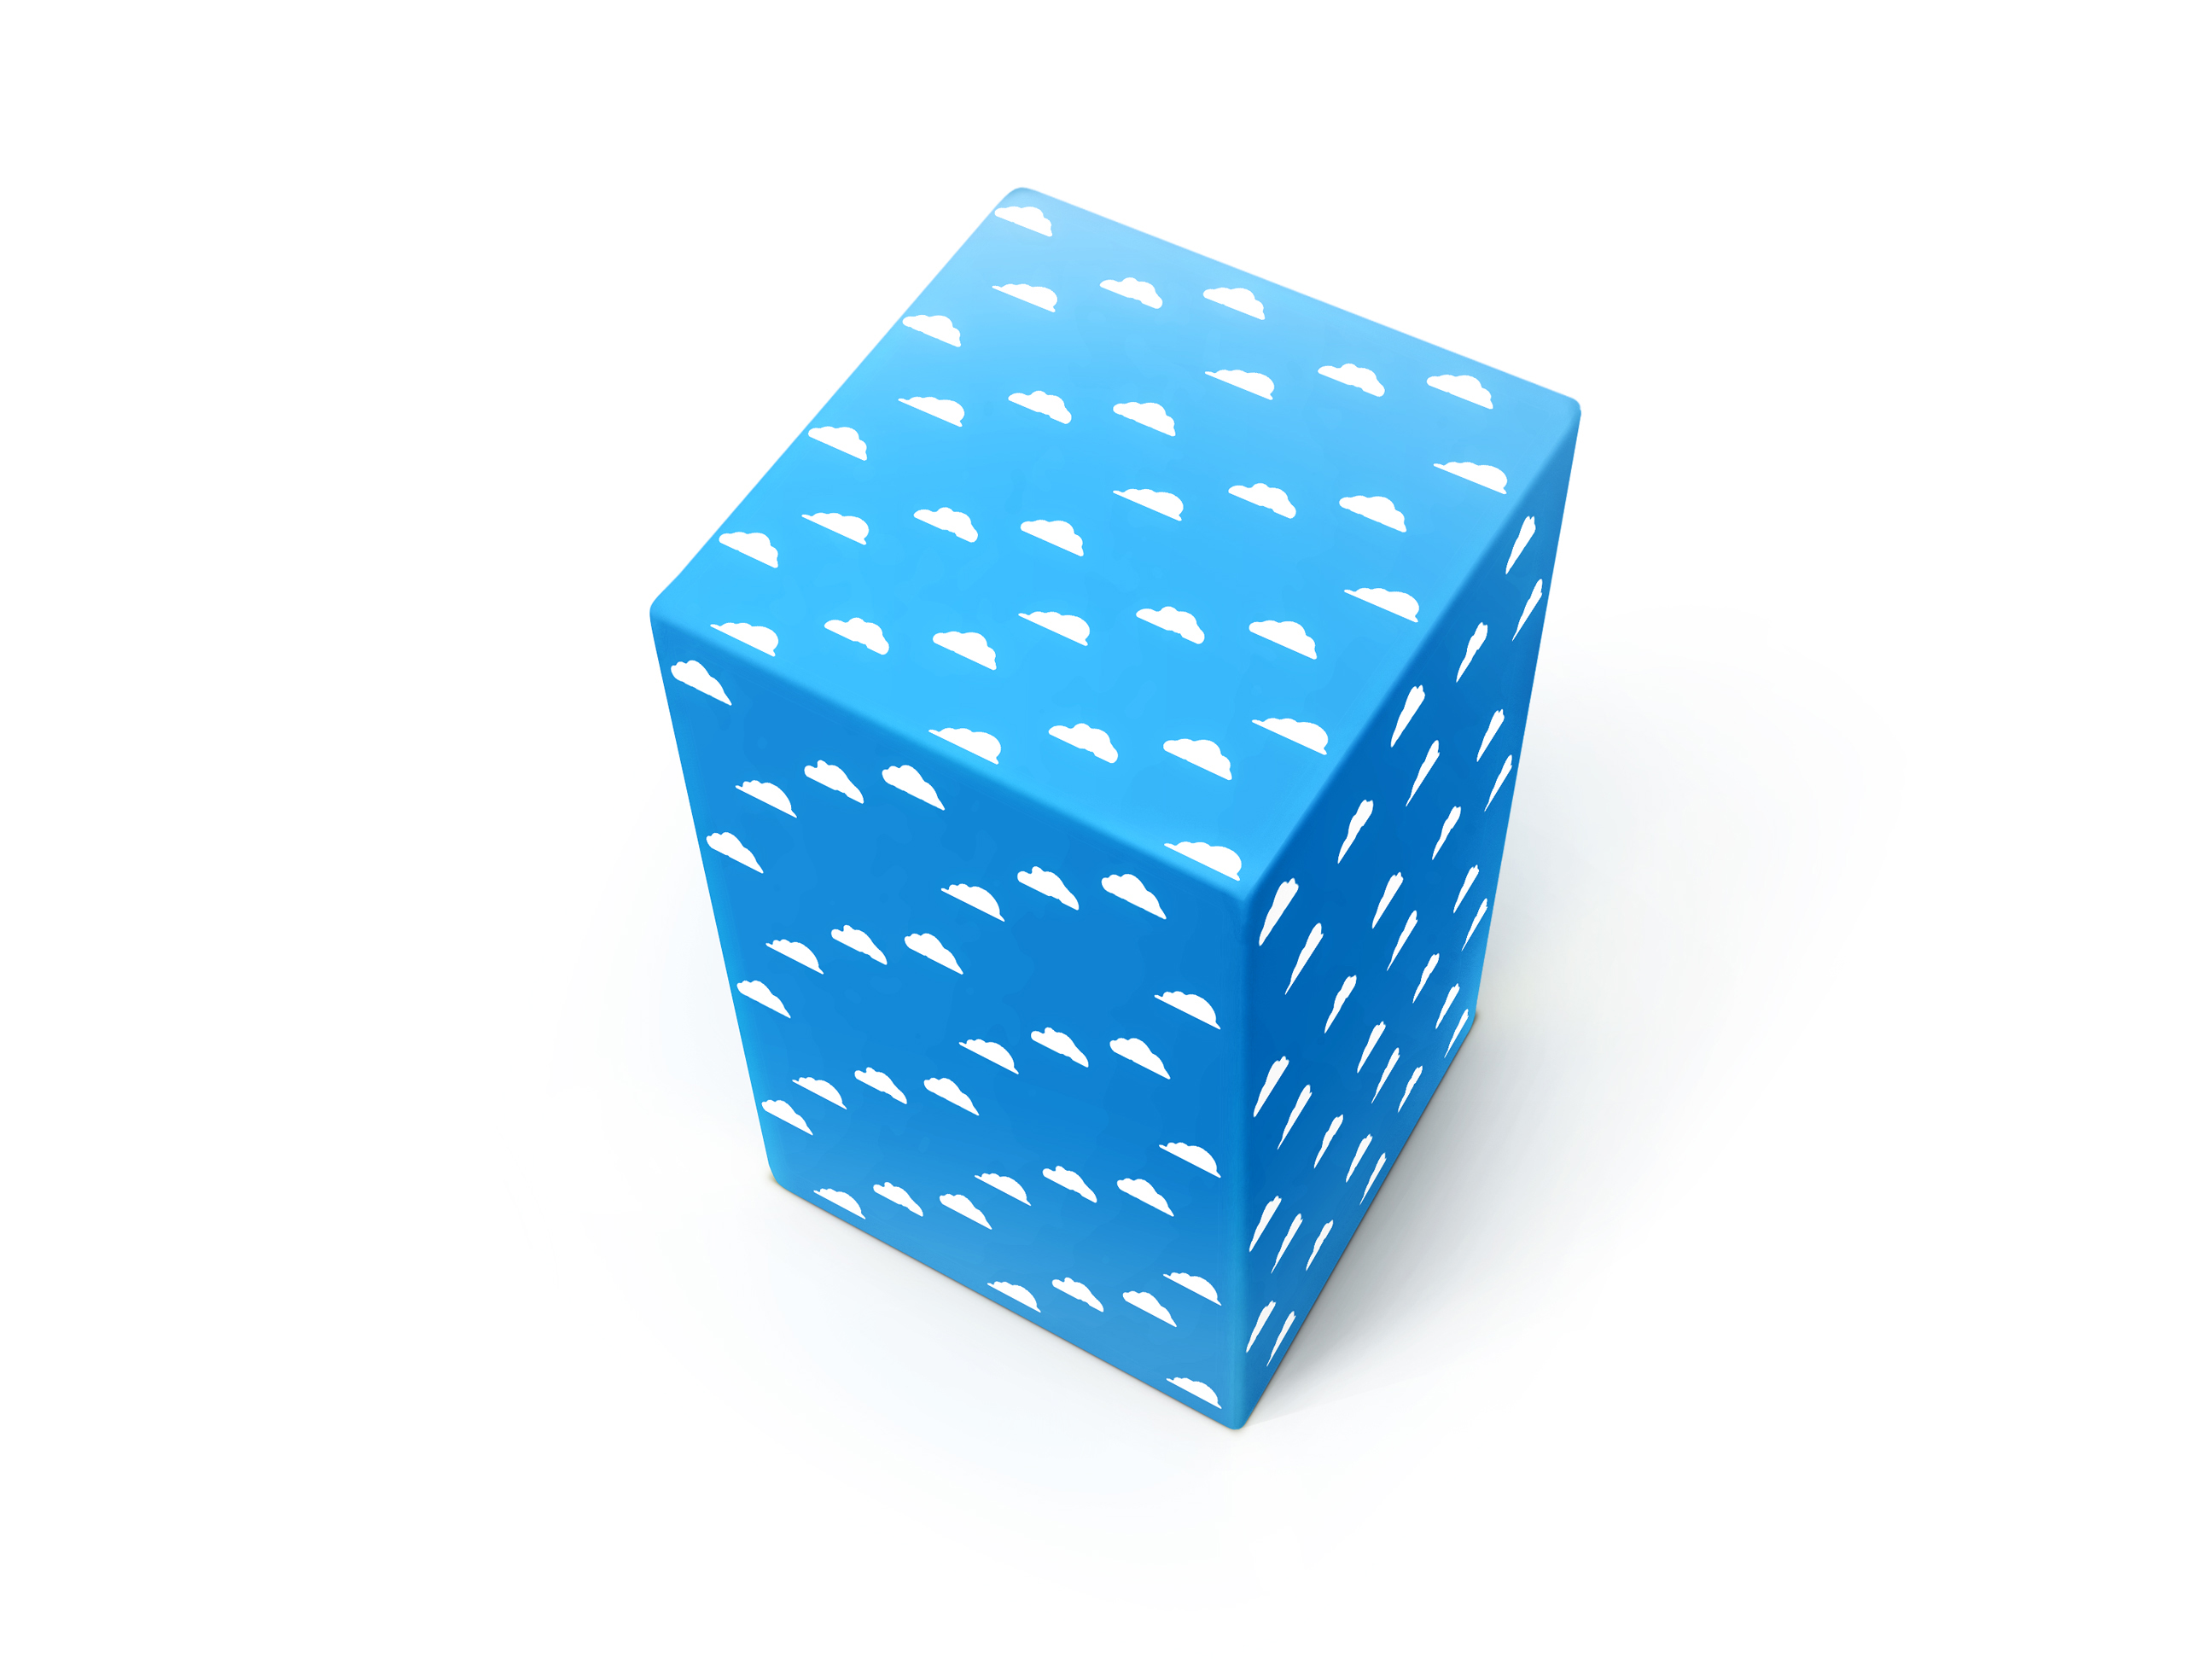 Blue cube. Голубая коробка. Синяя коробка. Куб Blue Box. Упаковка кубоид прозрачная.